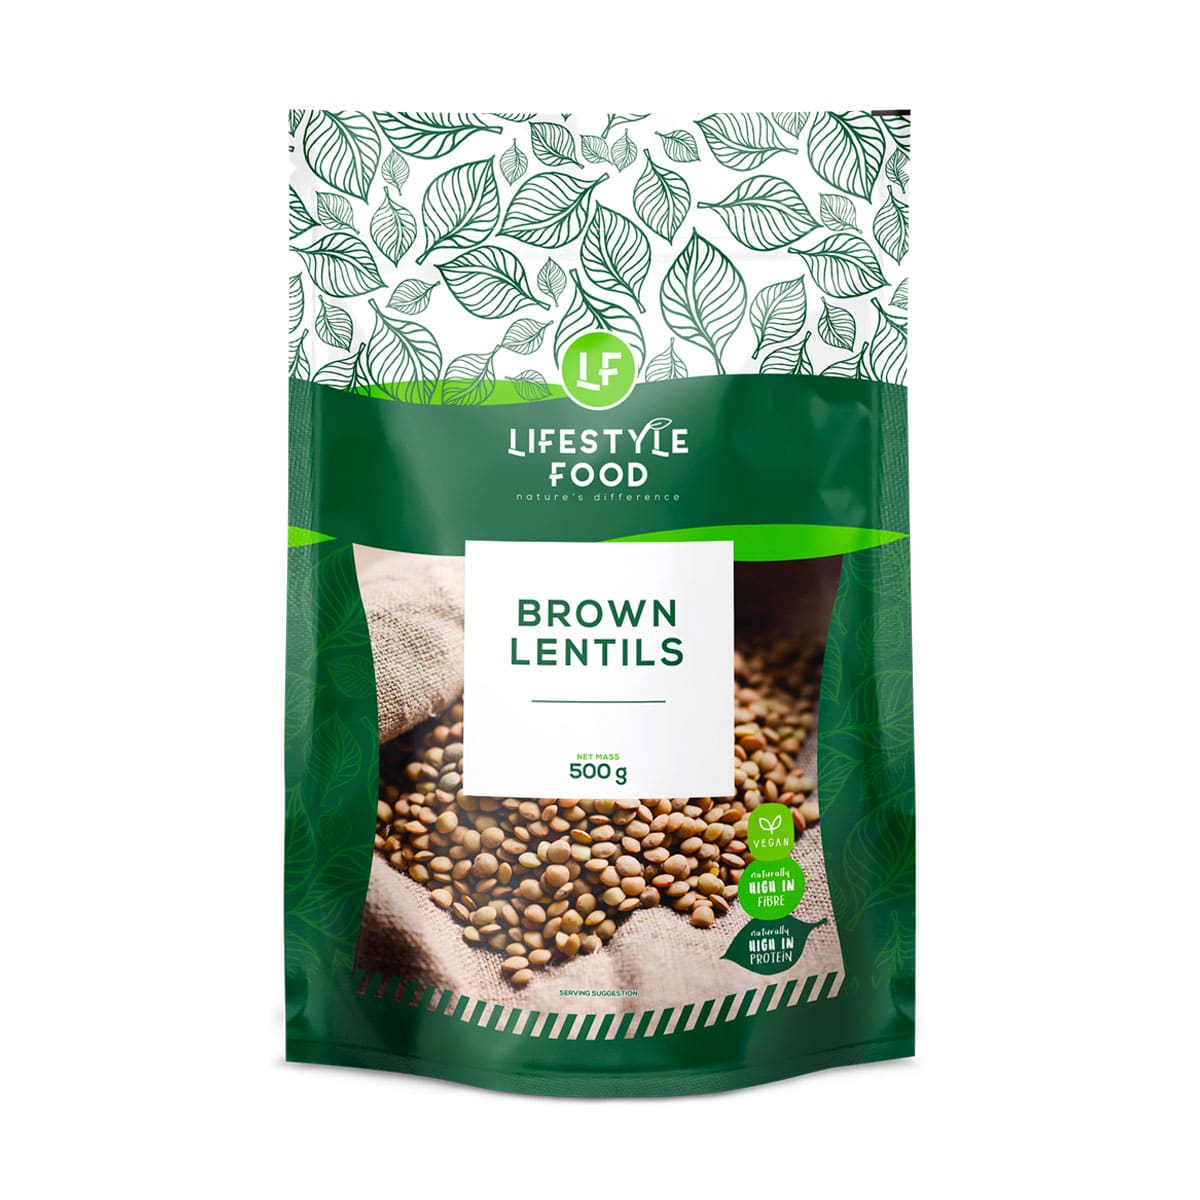 Lifestyle Food Brown Lentils - 500g